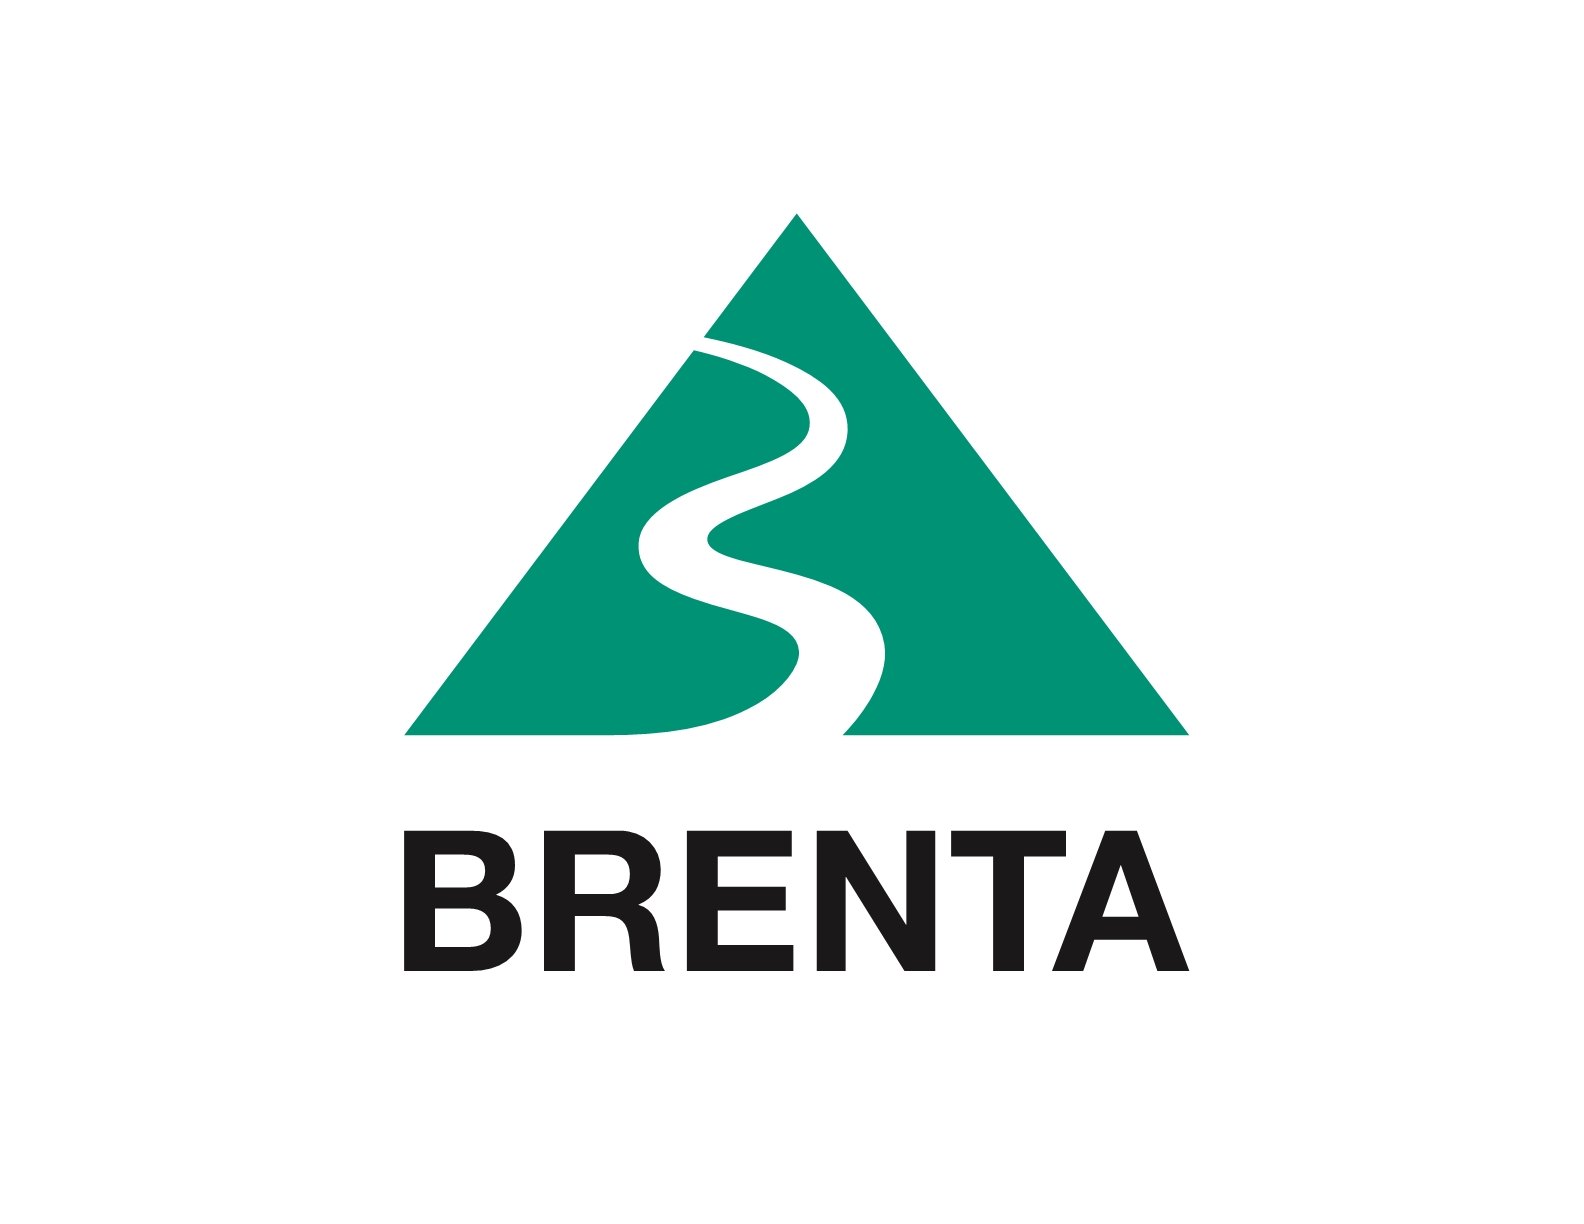 The Brenta Group